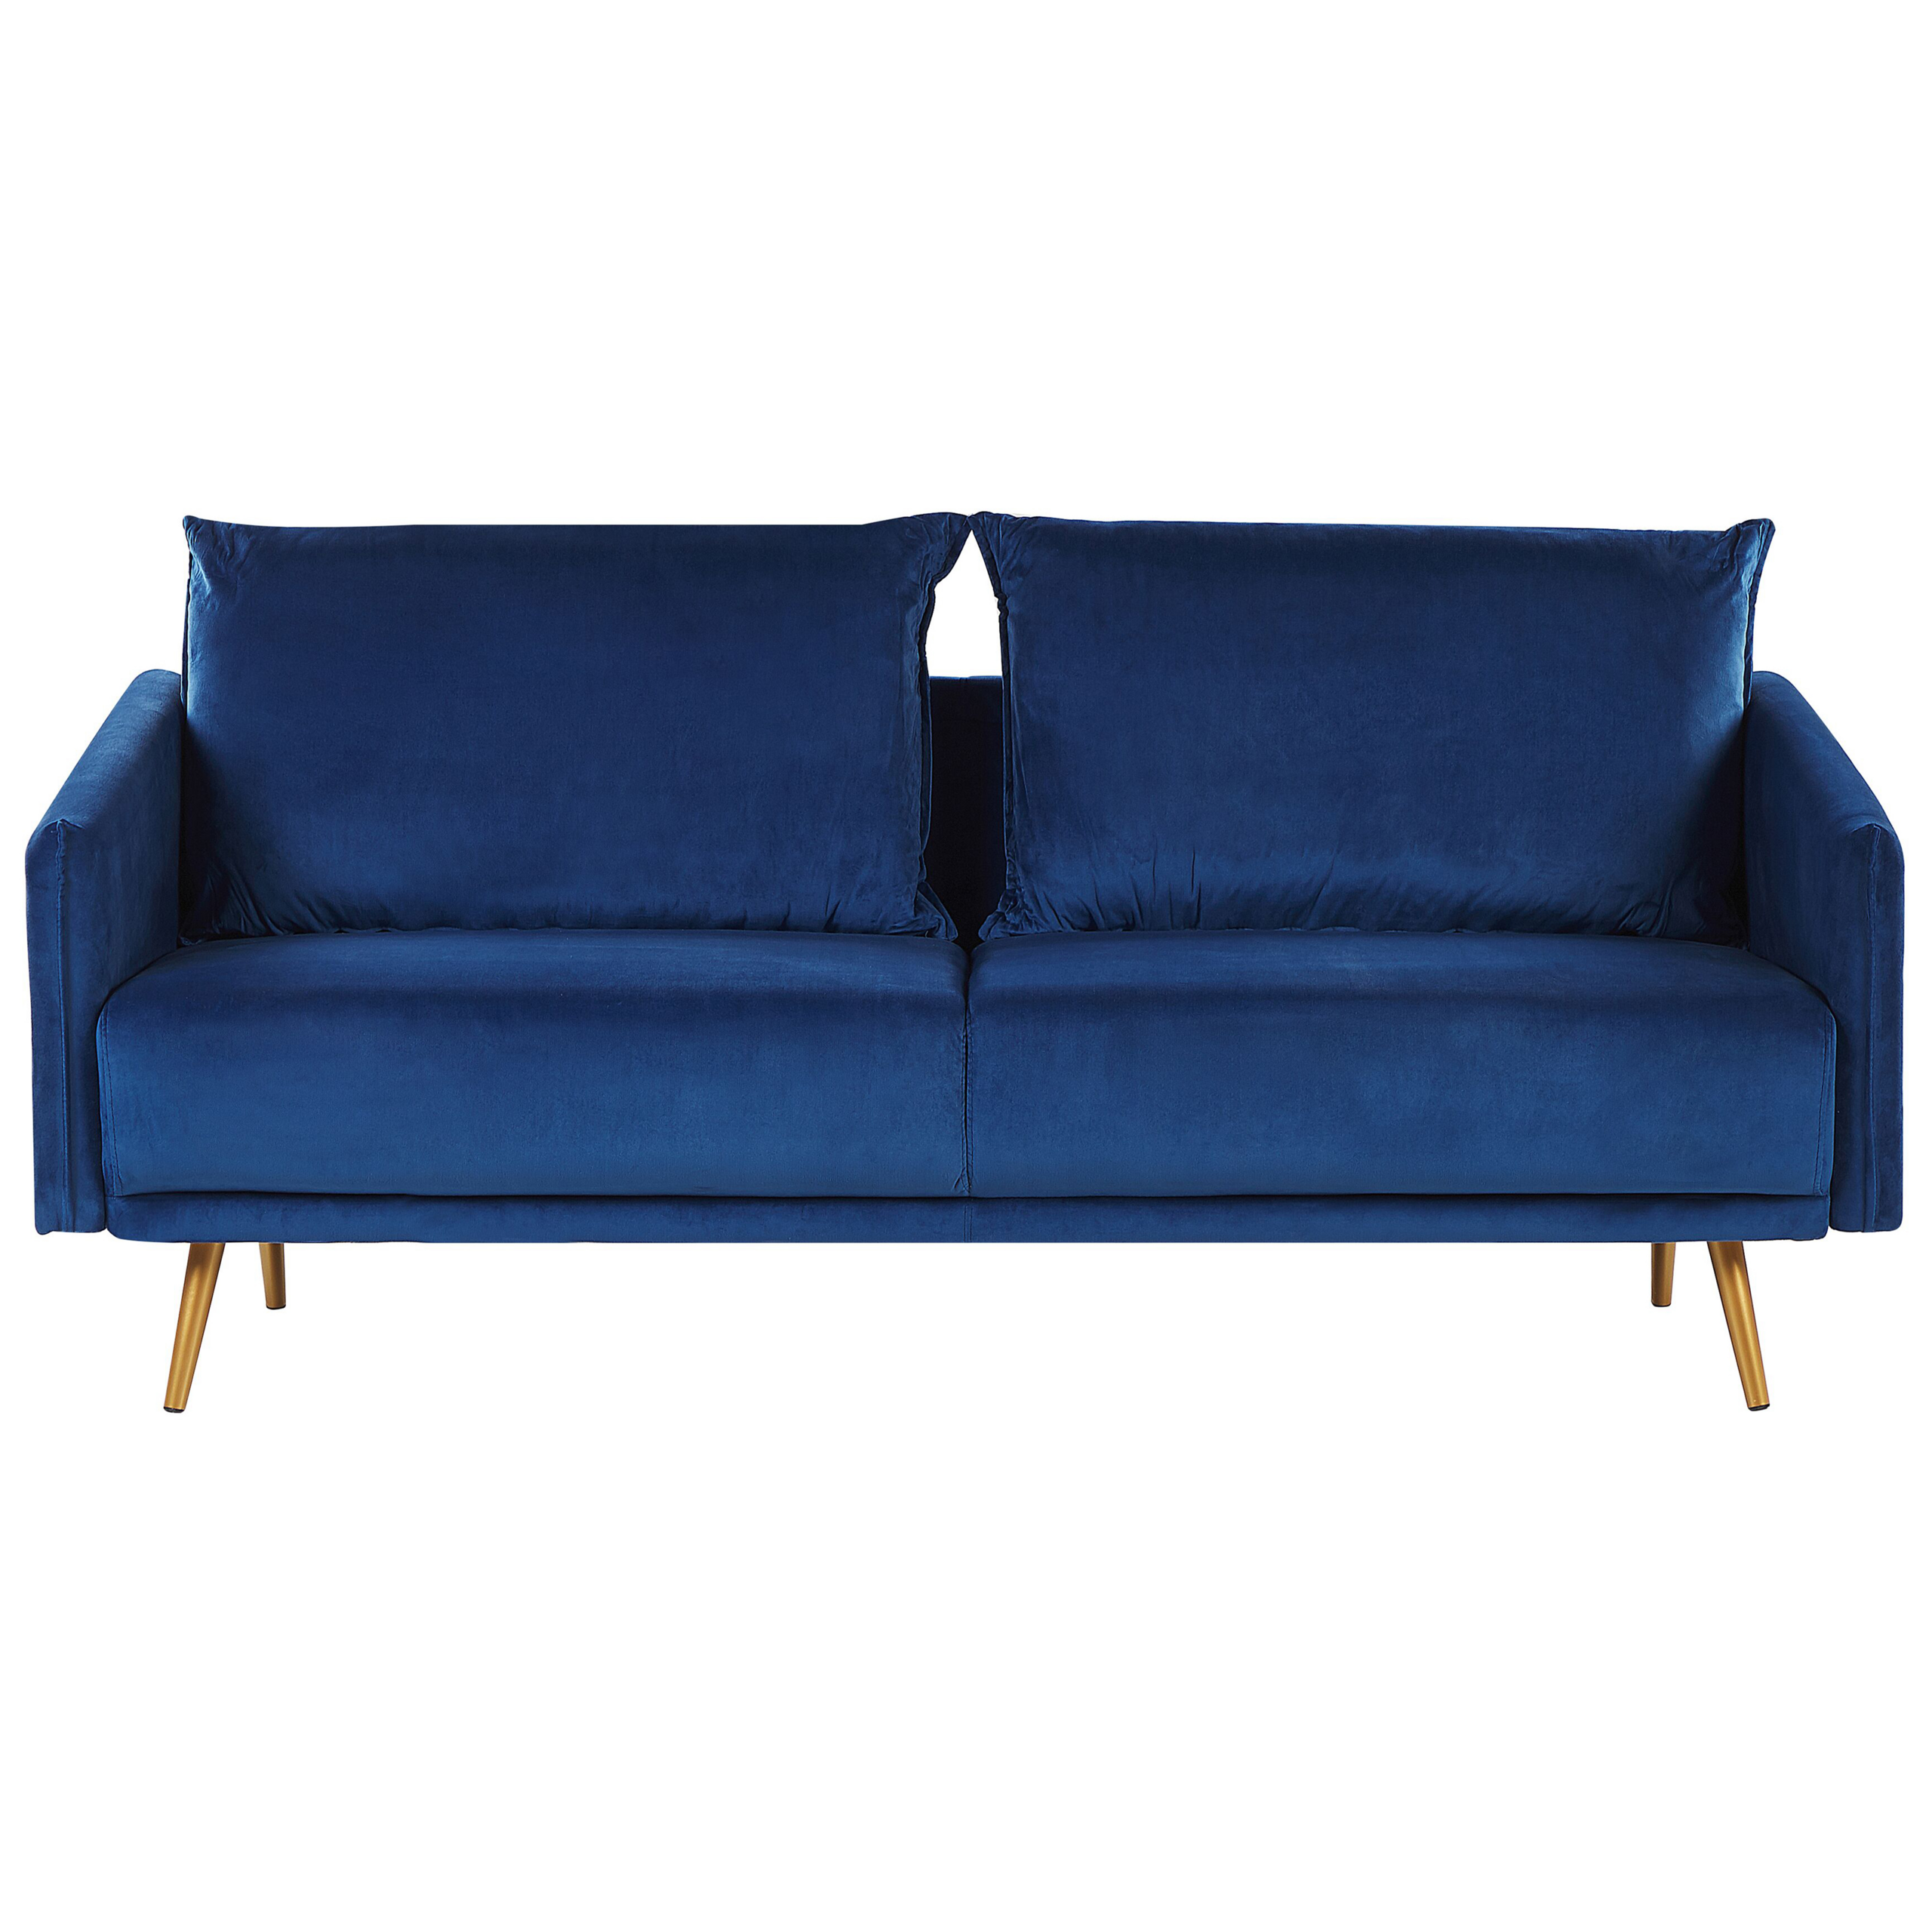 Beliani Sofa Navy Blue Velvet 3 Seater Back Cushioned Seat Metal Golden Legs Retro Glam